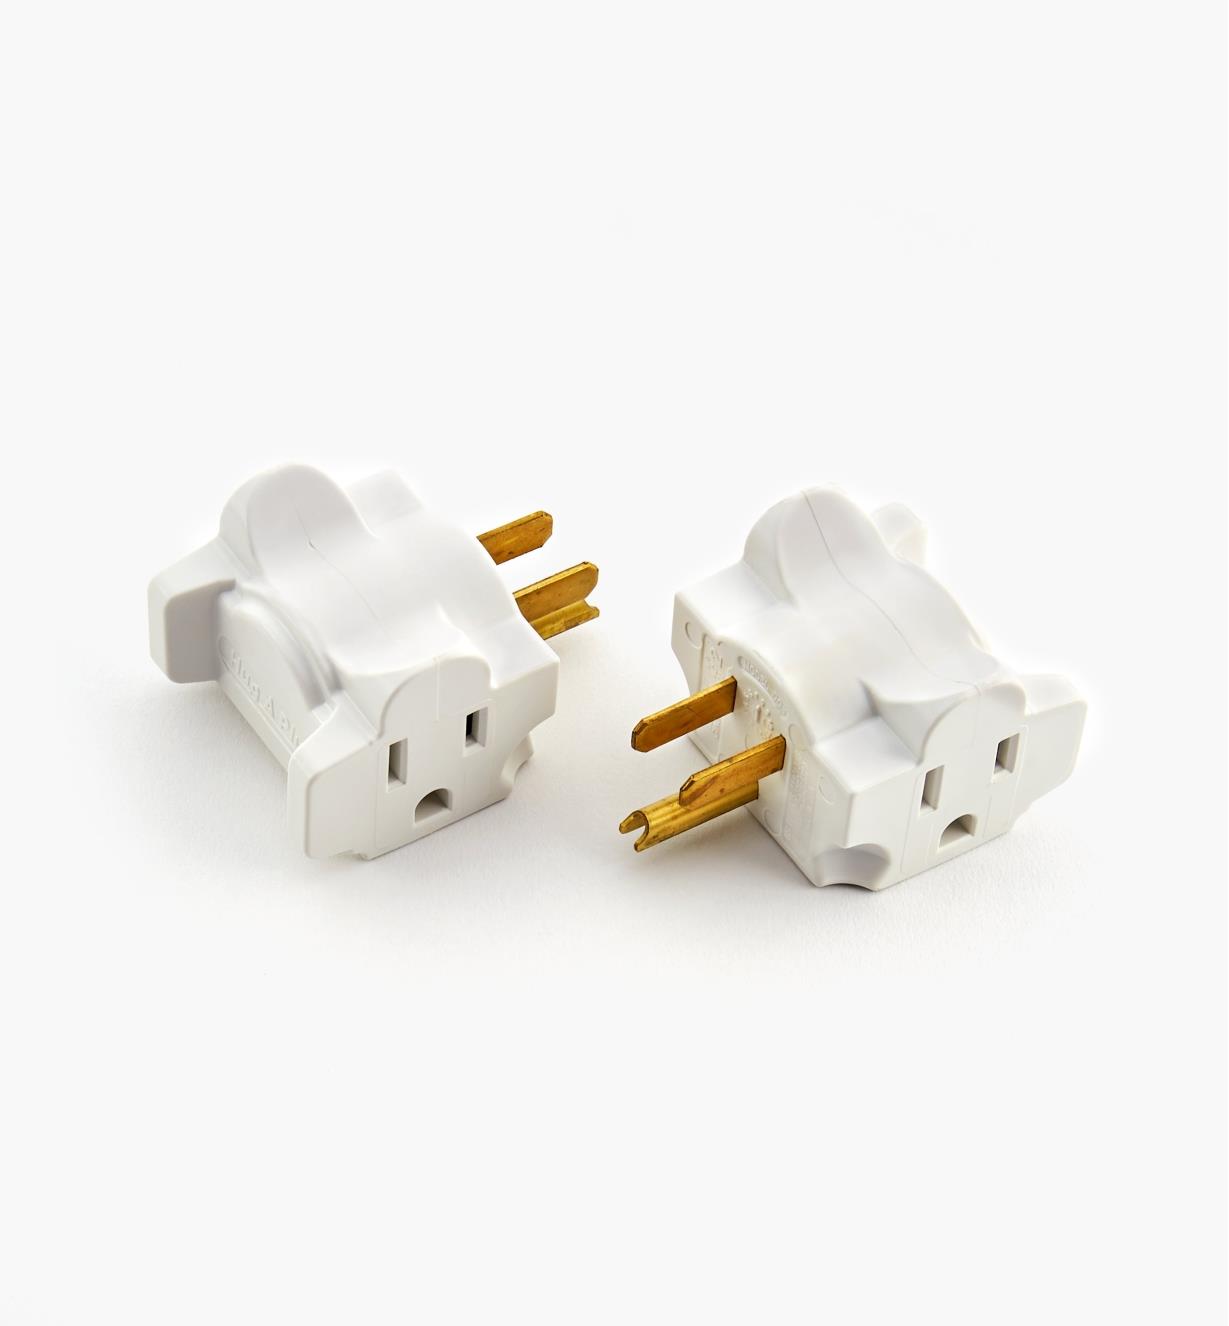 09A0850 - White Hug-A-Plug Low-Profile Plug Adapter, pair